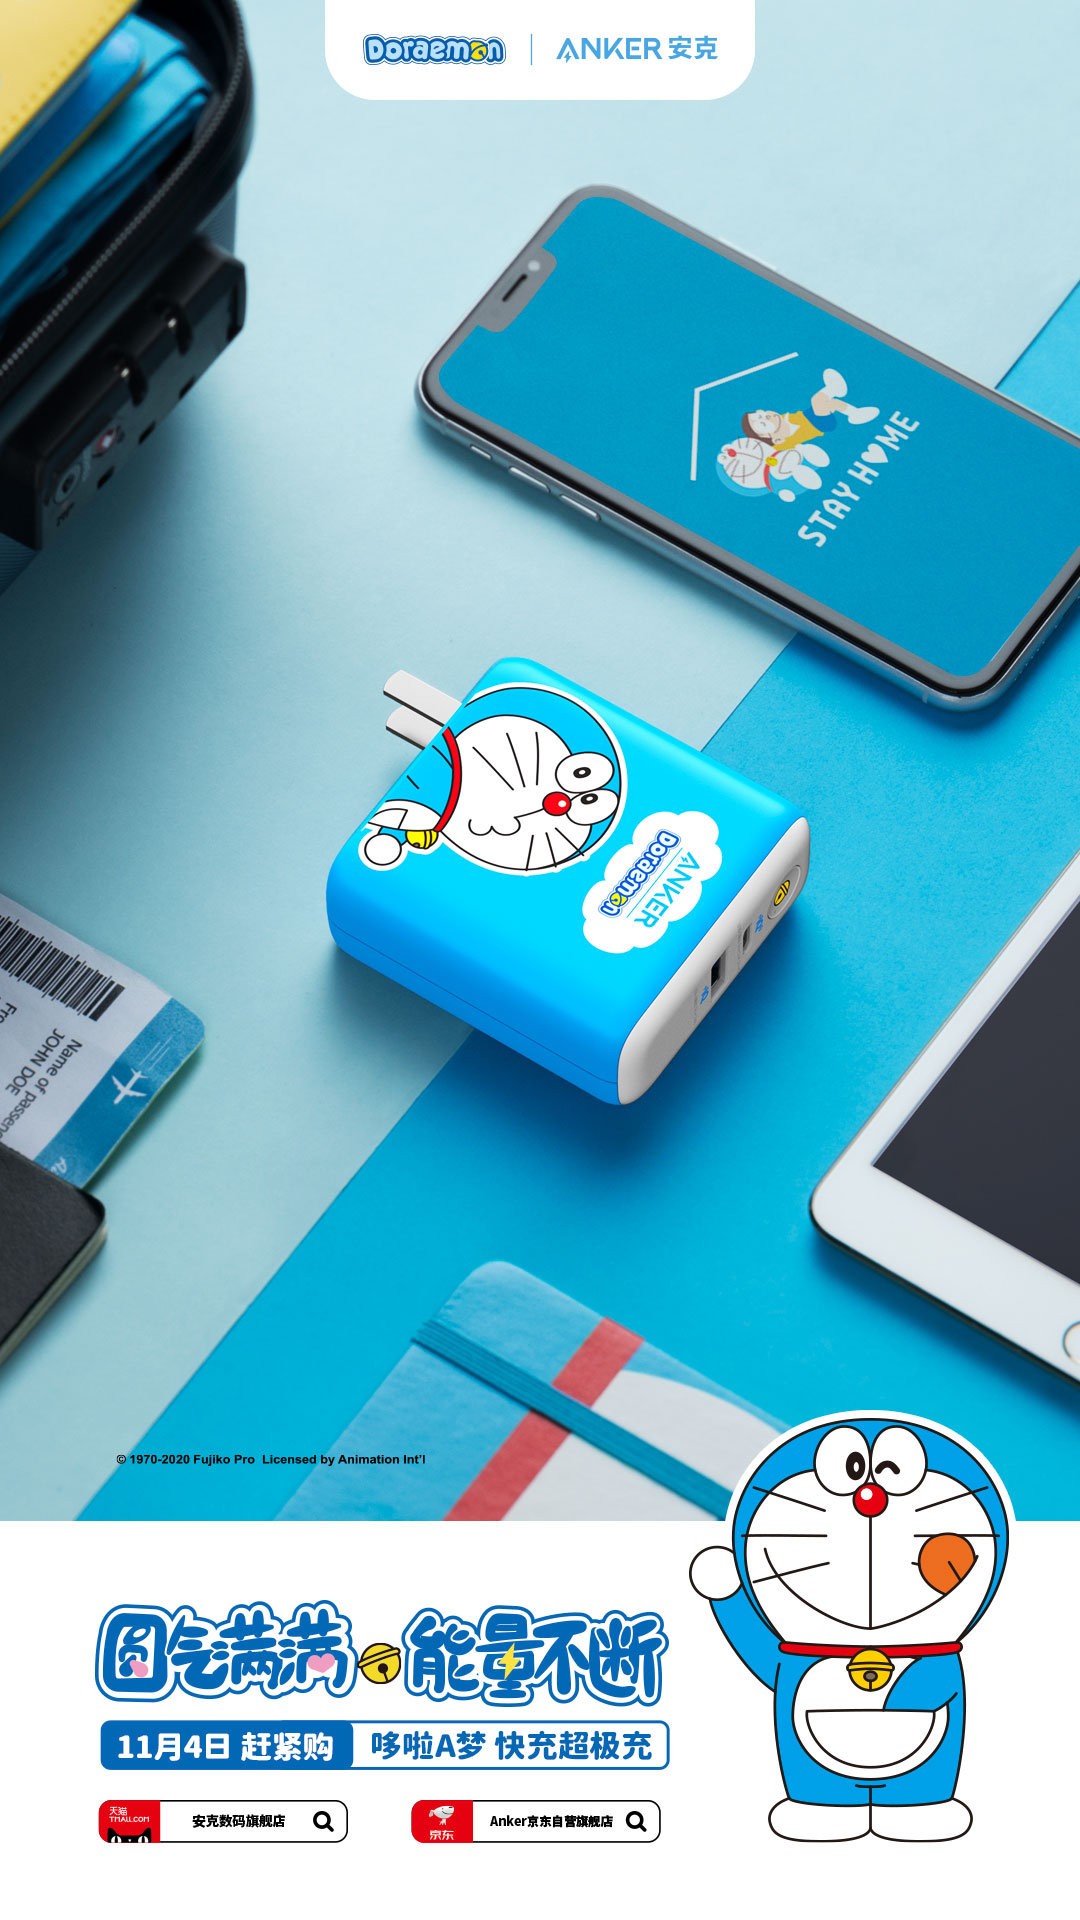 Anker Unveils Iphone 12 Charging Accessories Doraemon Versions Coming On Wednesday Gsmarena Com News